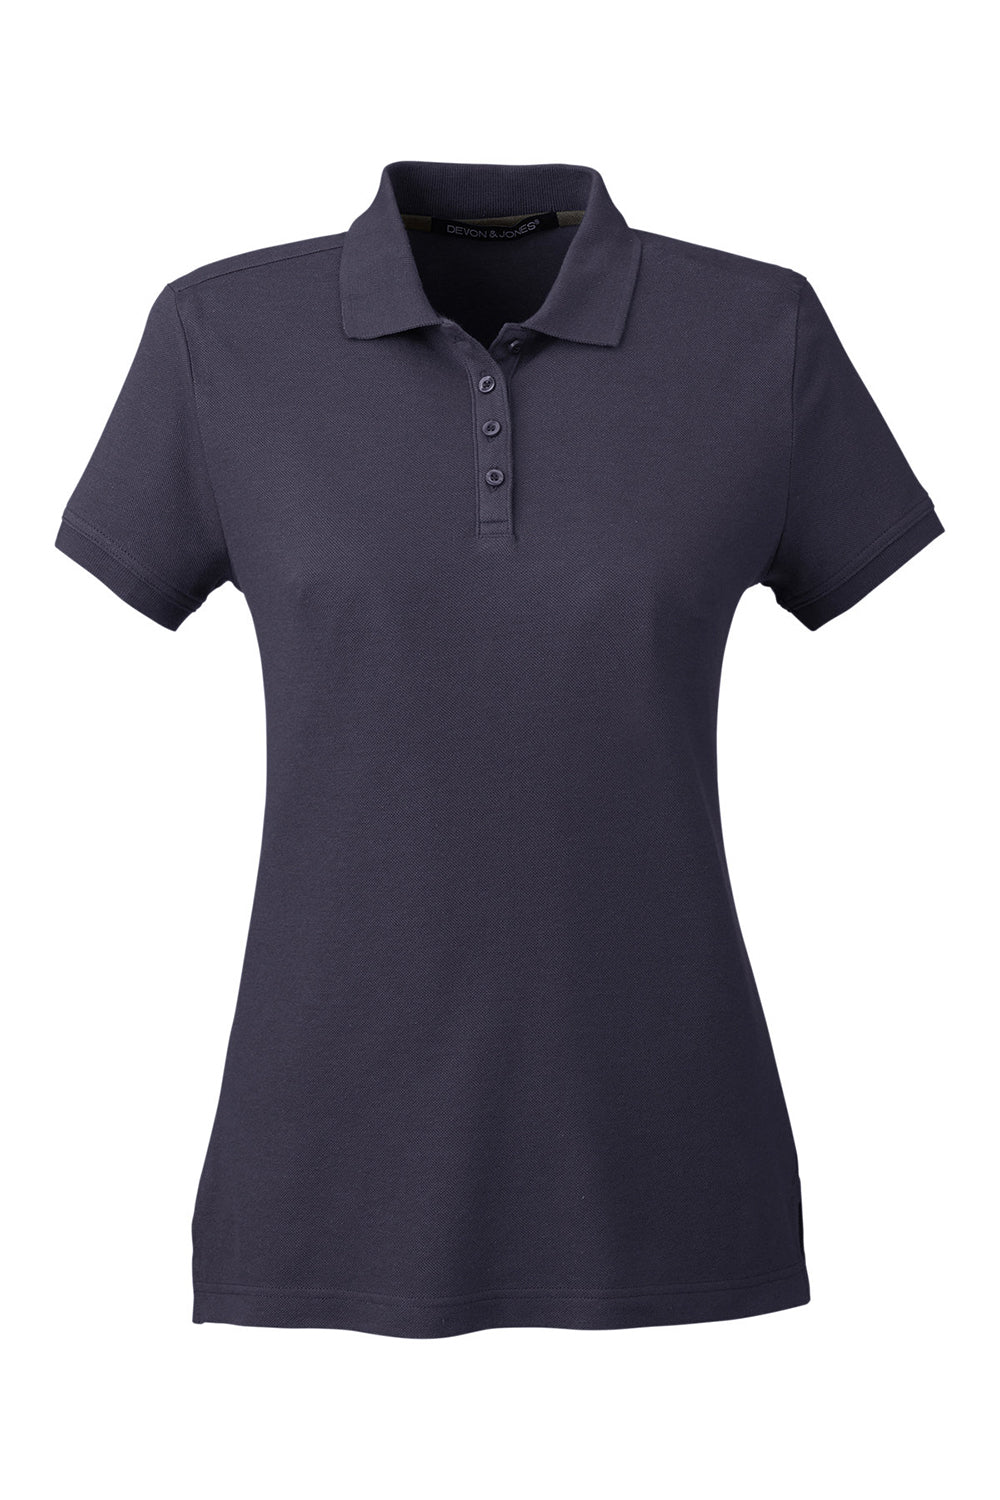 Devon & Jones DG100W Womens New Classics Performance Moisture Wicking Short Sleeve Polo Shirt Navy Blue Flat Front